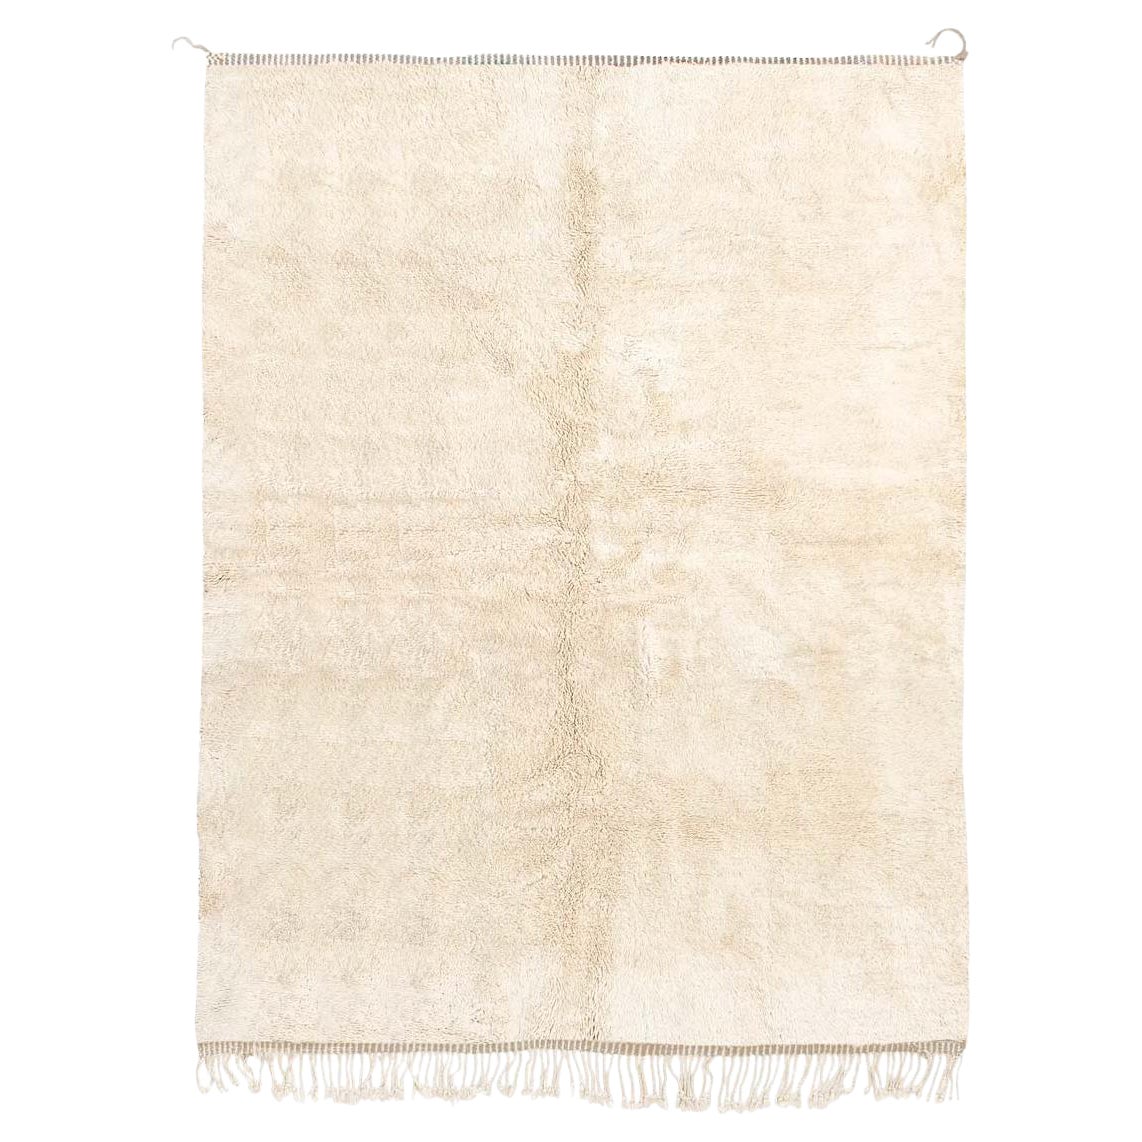 Tapis marocain Beni Mrirt 6'x9', tapis Shag de couleur blanc, fait sur mesure